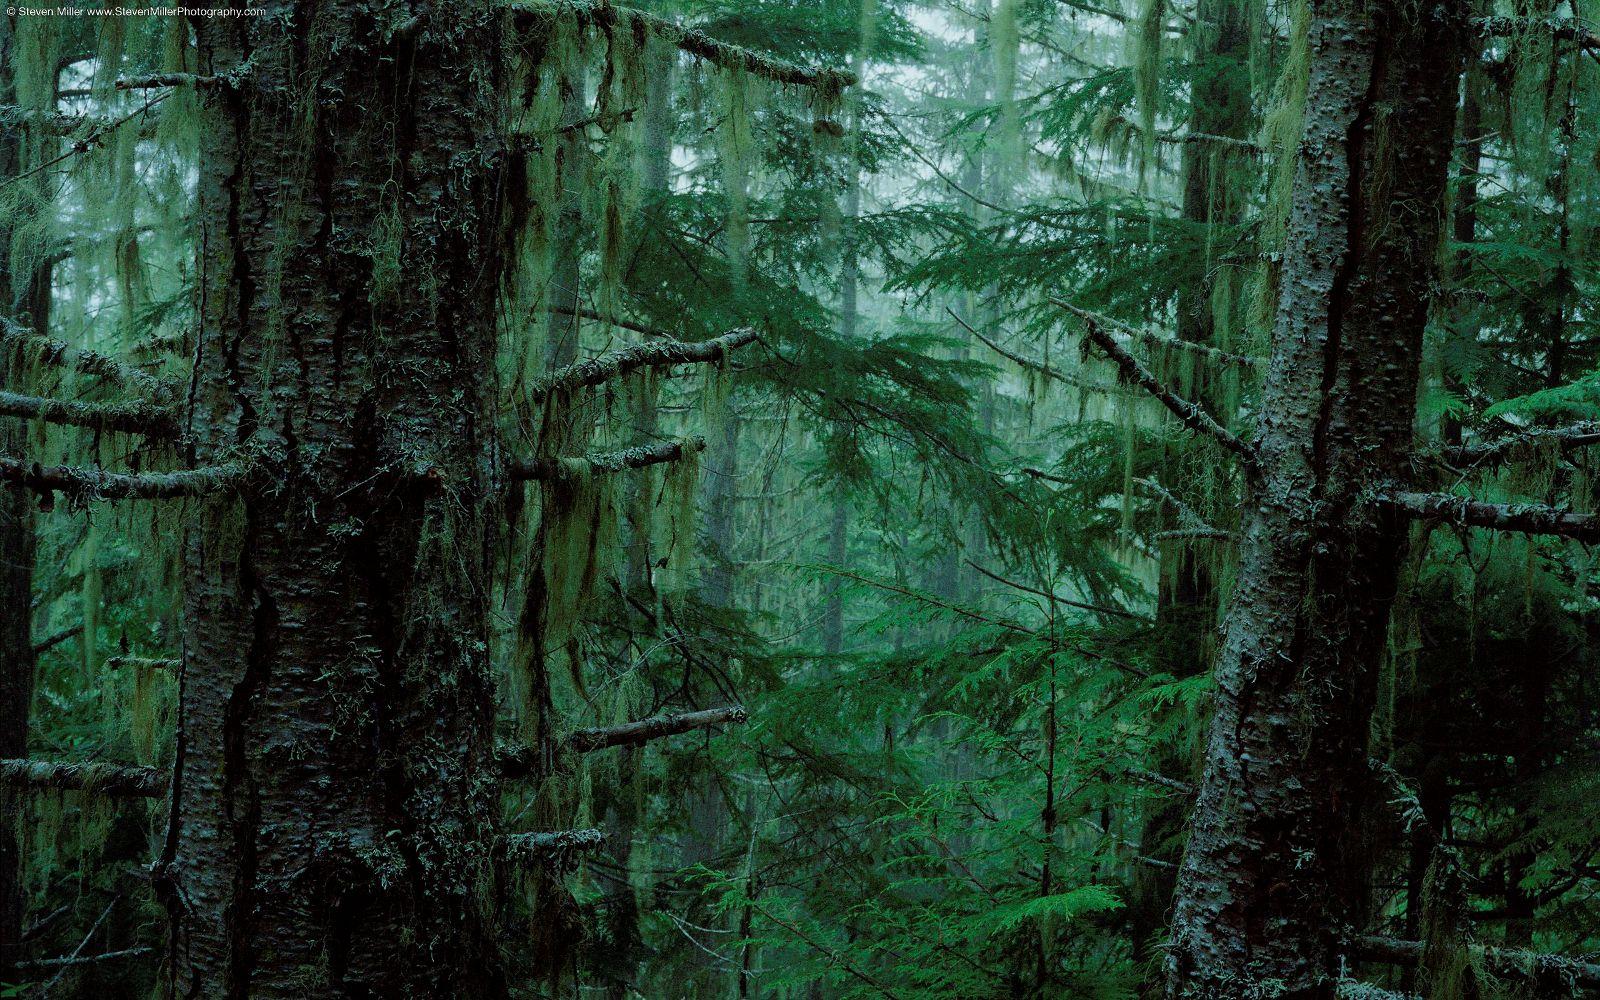 Top Rain Rainy Forest Images for Pinterest